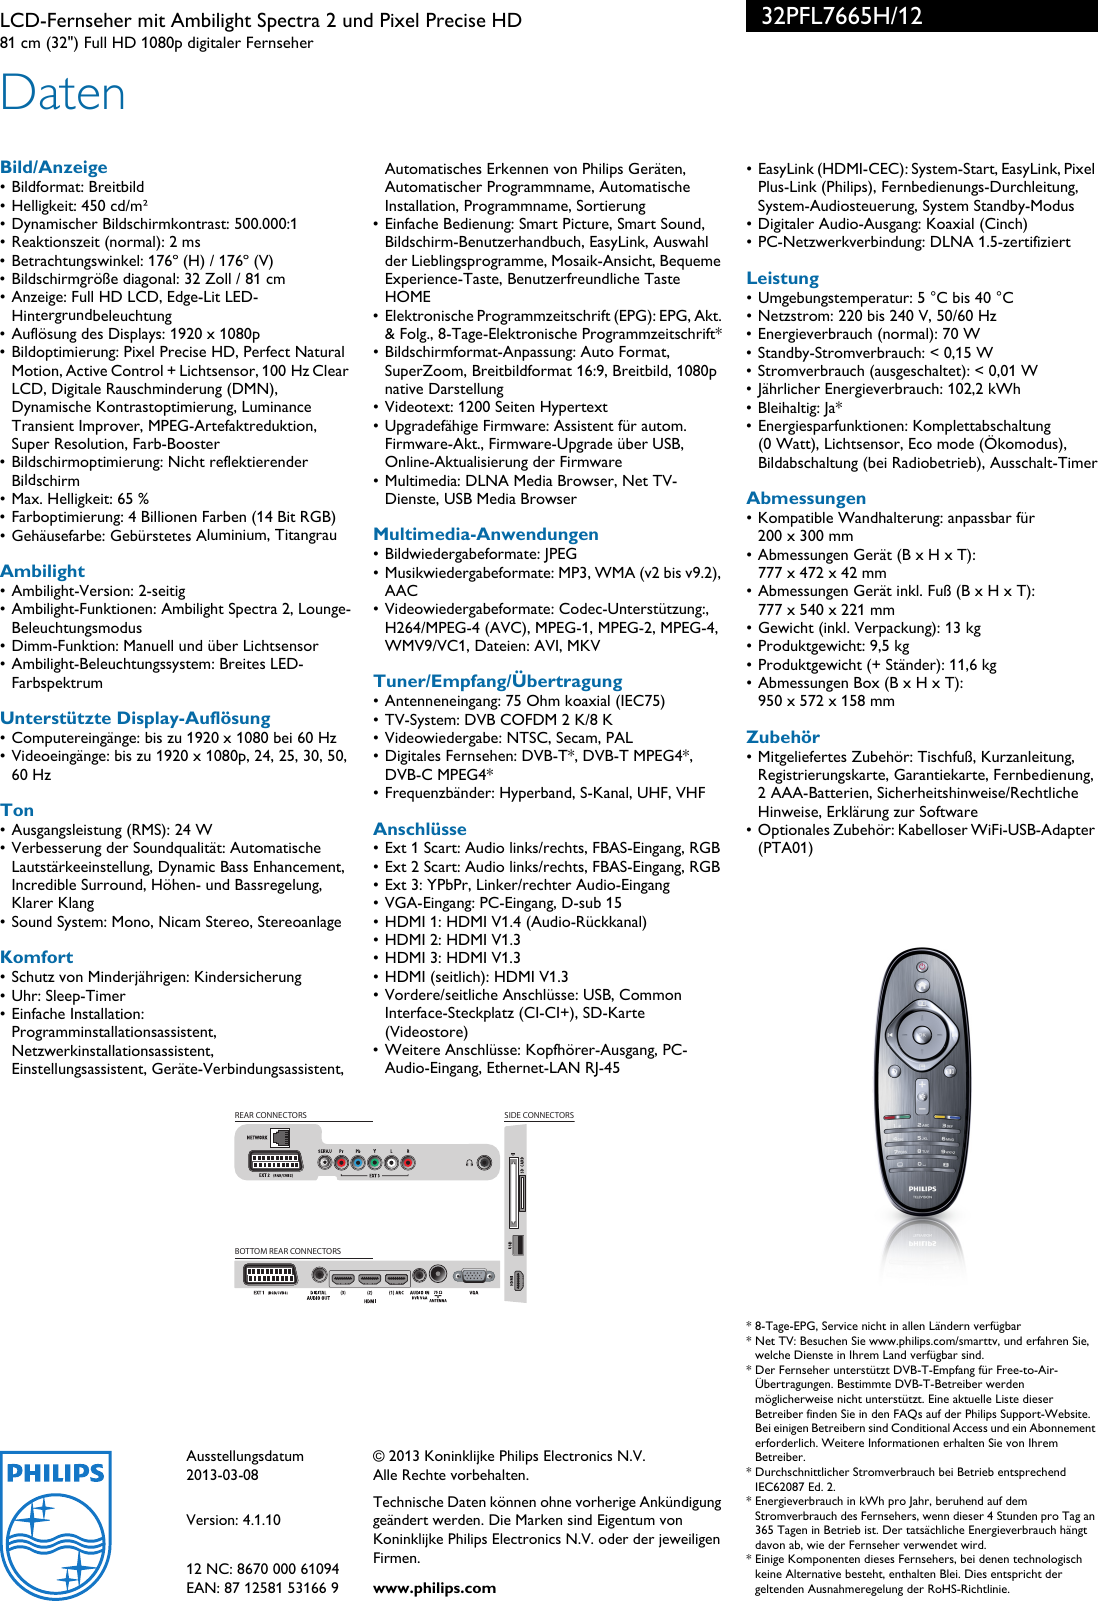 Page 3 of 3 - Philips 32PFL7665H/12 Leaflet 32PFL7665H_12 Released Germany (German)  User Manual Datenblatt 32pfl7665h 12 Pss Deuat